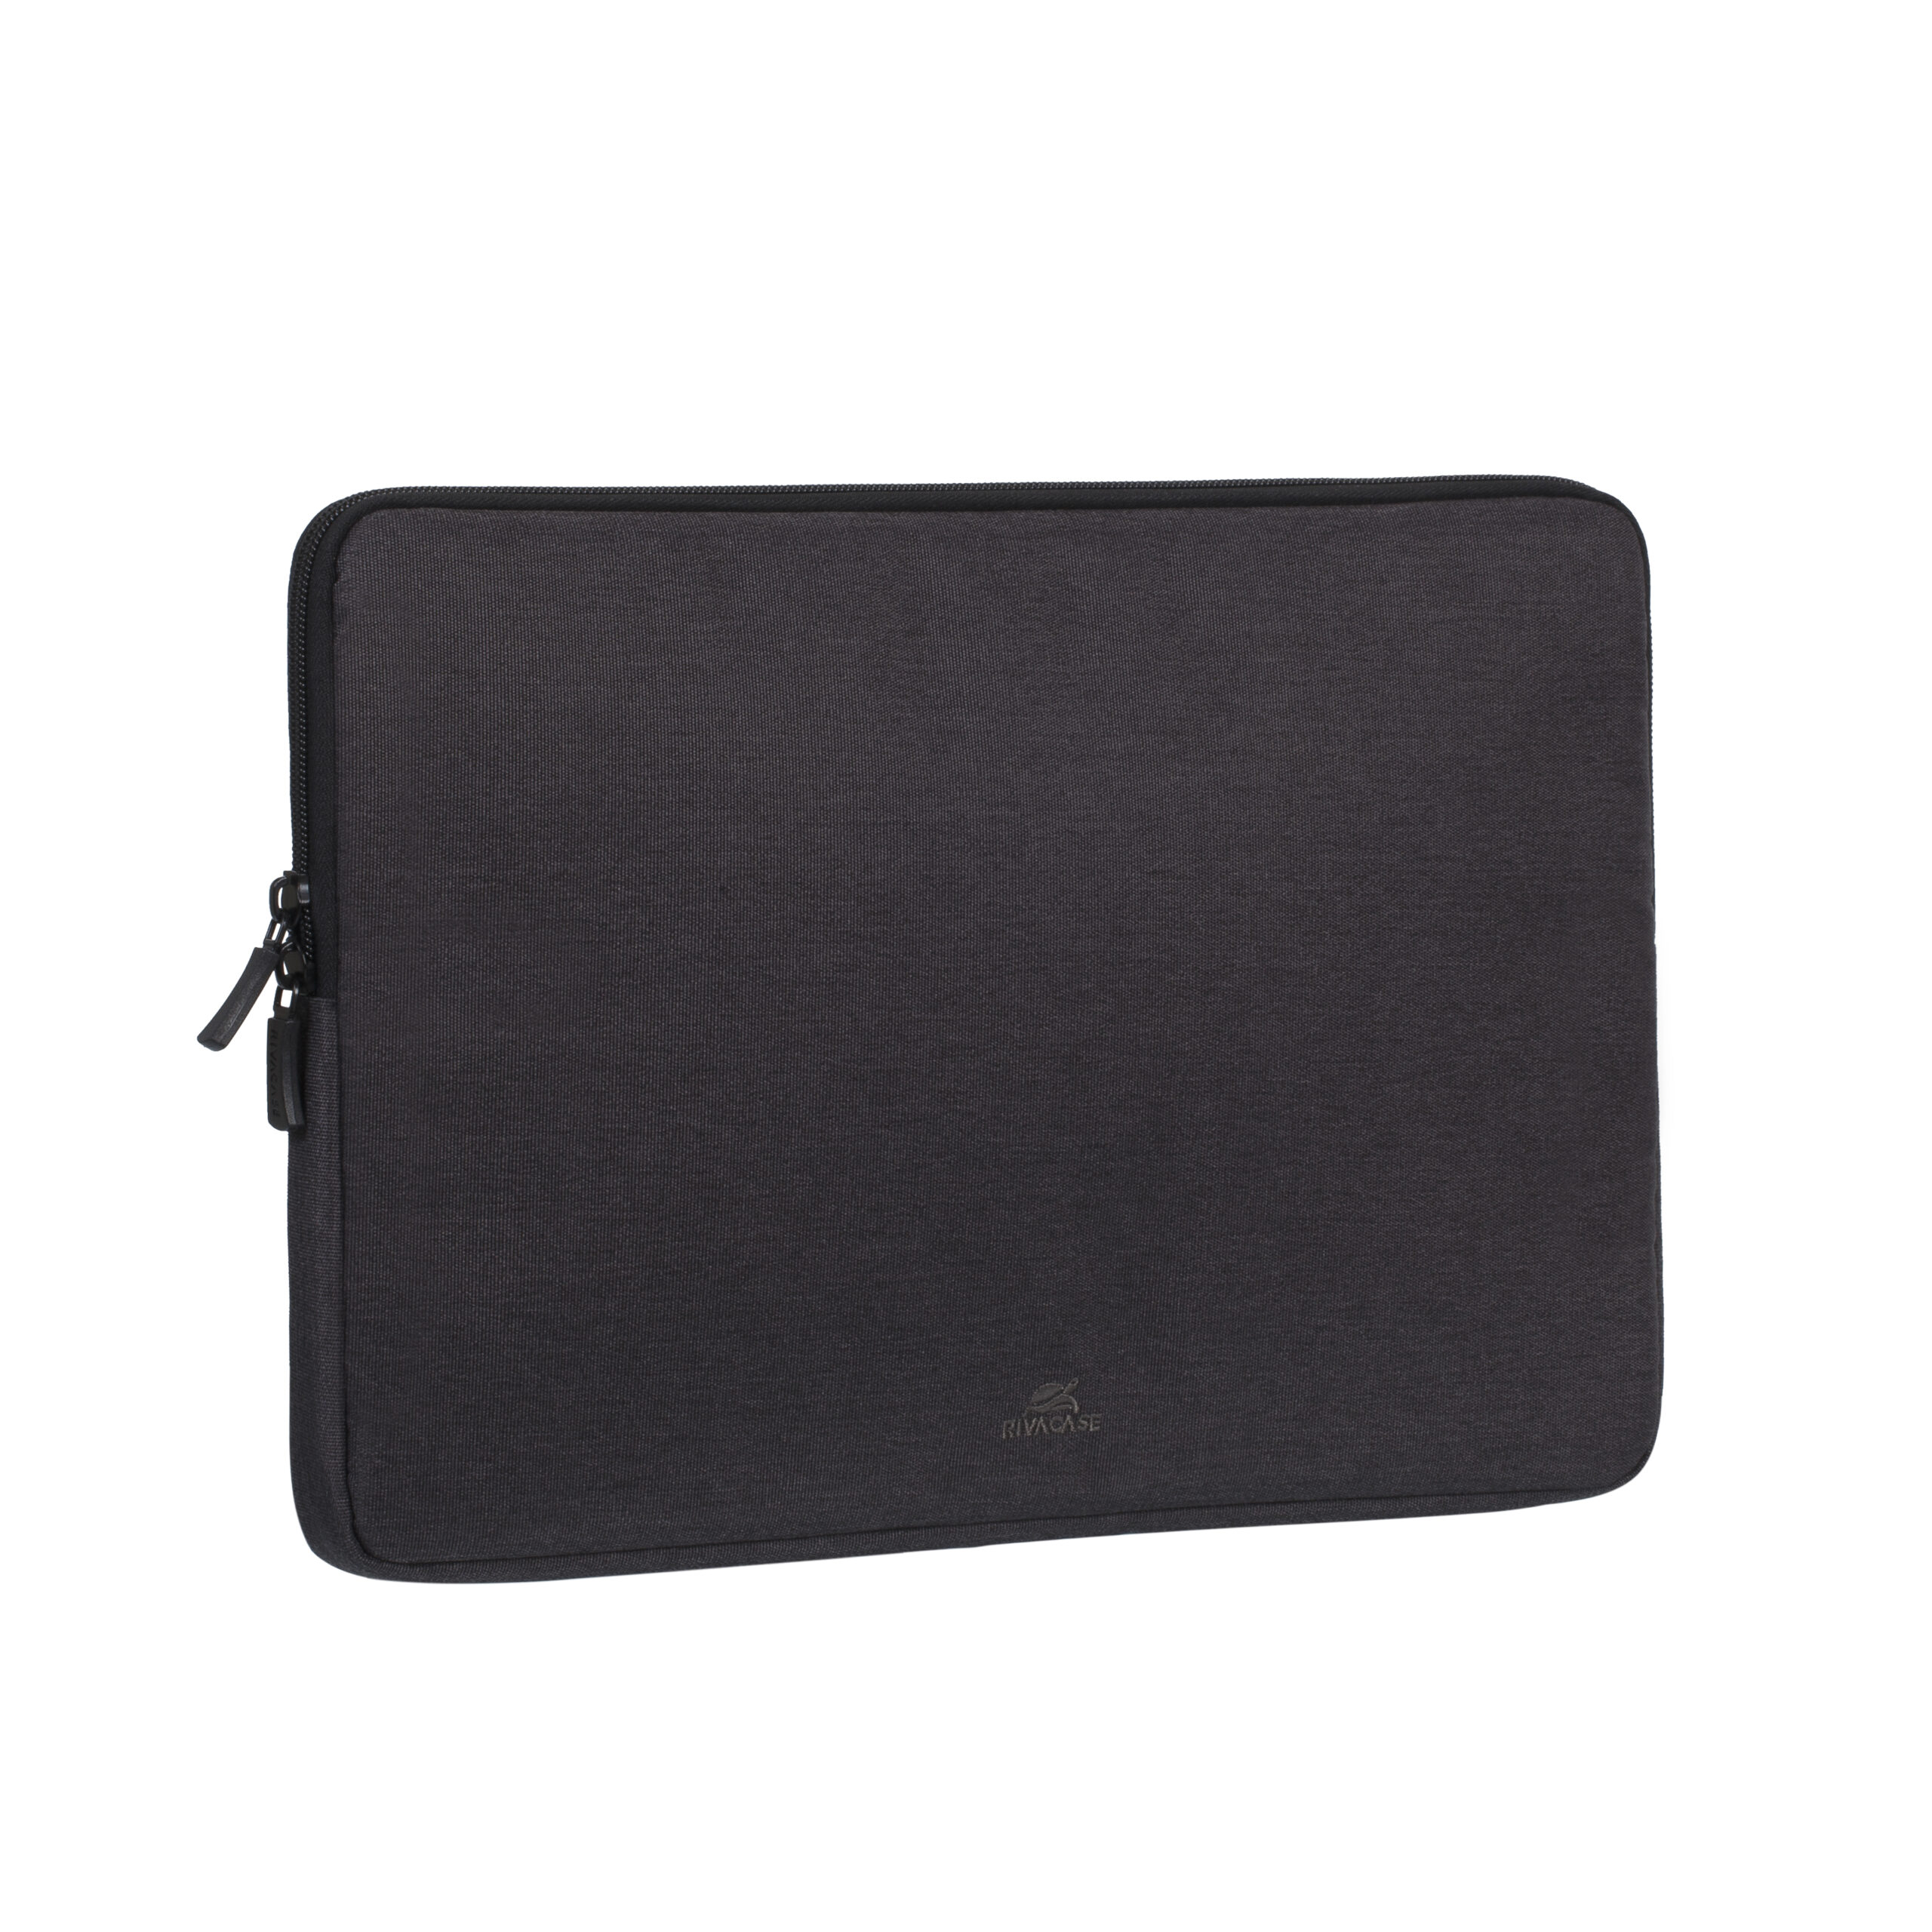 RIVACASE 7704 black Laptop sleeve 13.3-14″ / 12